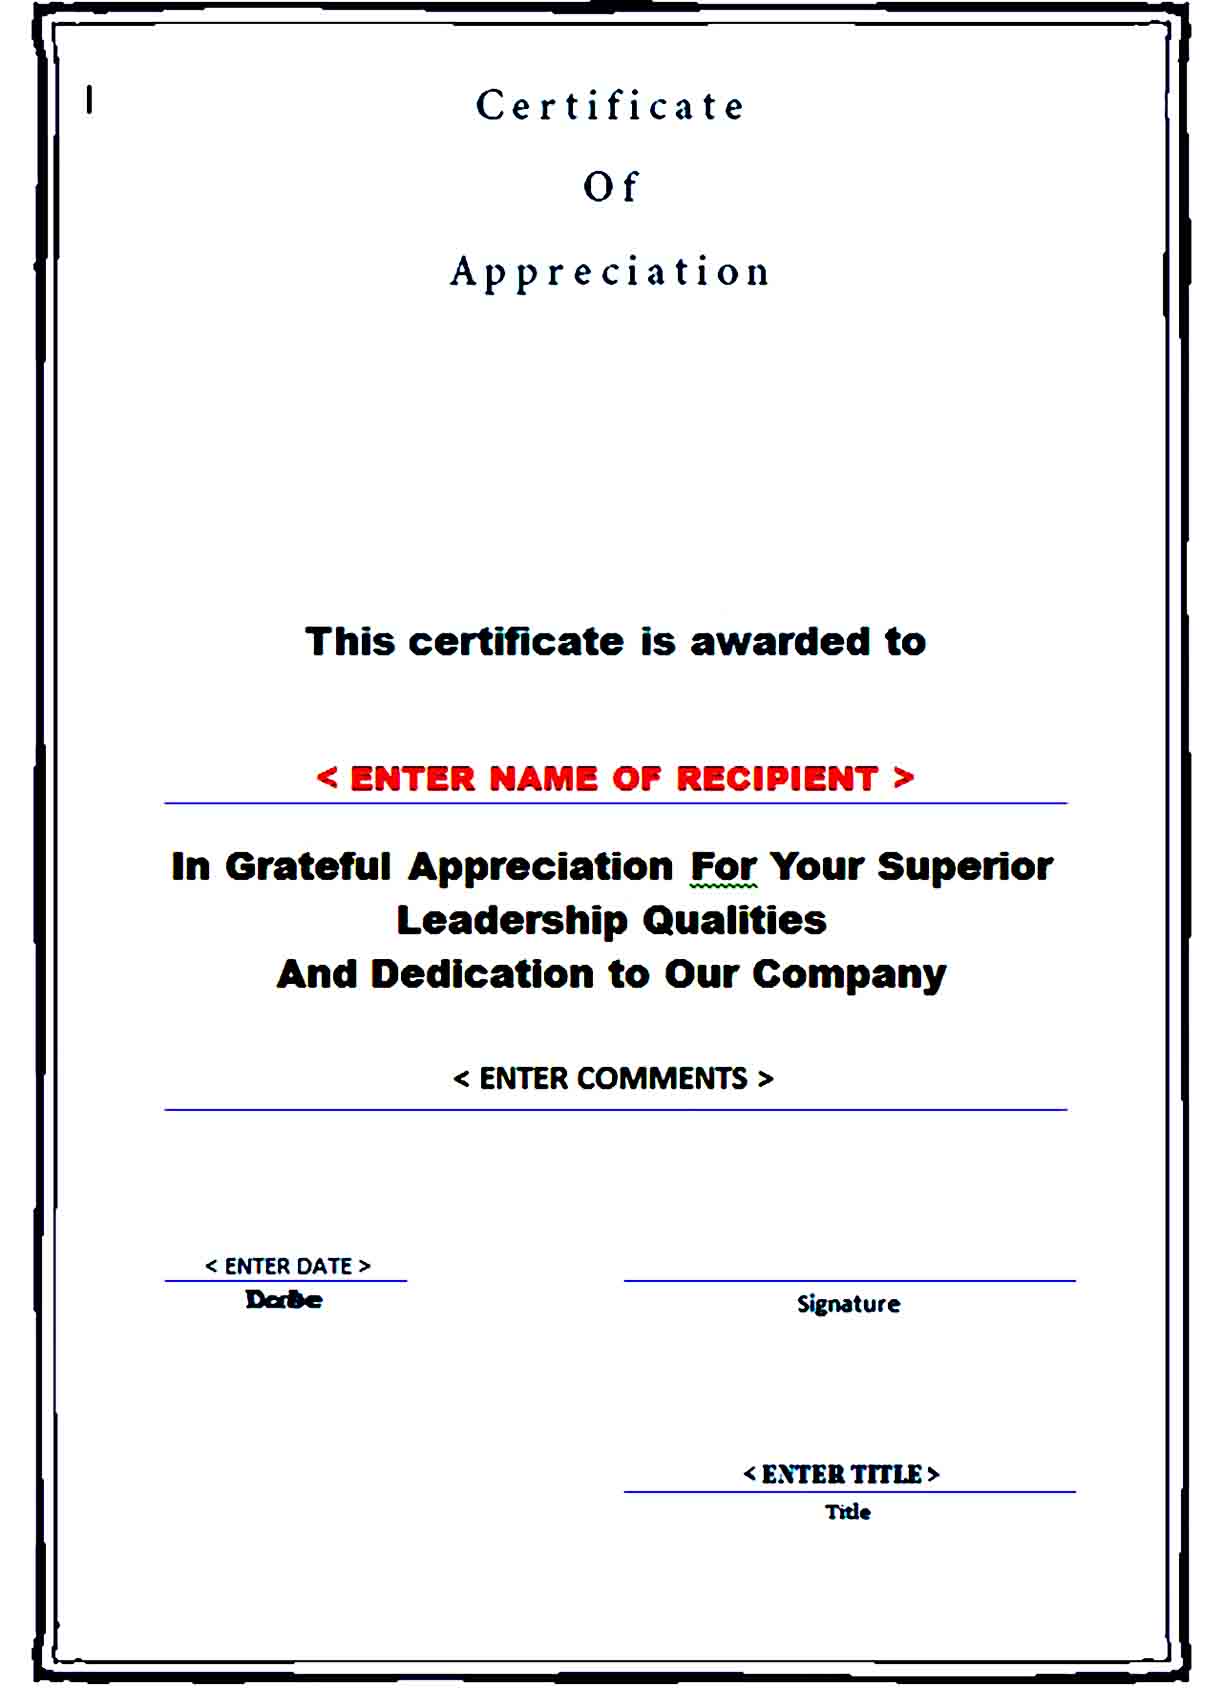 Certificate of Appreciation 12